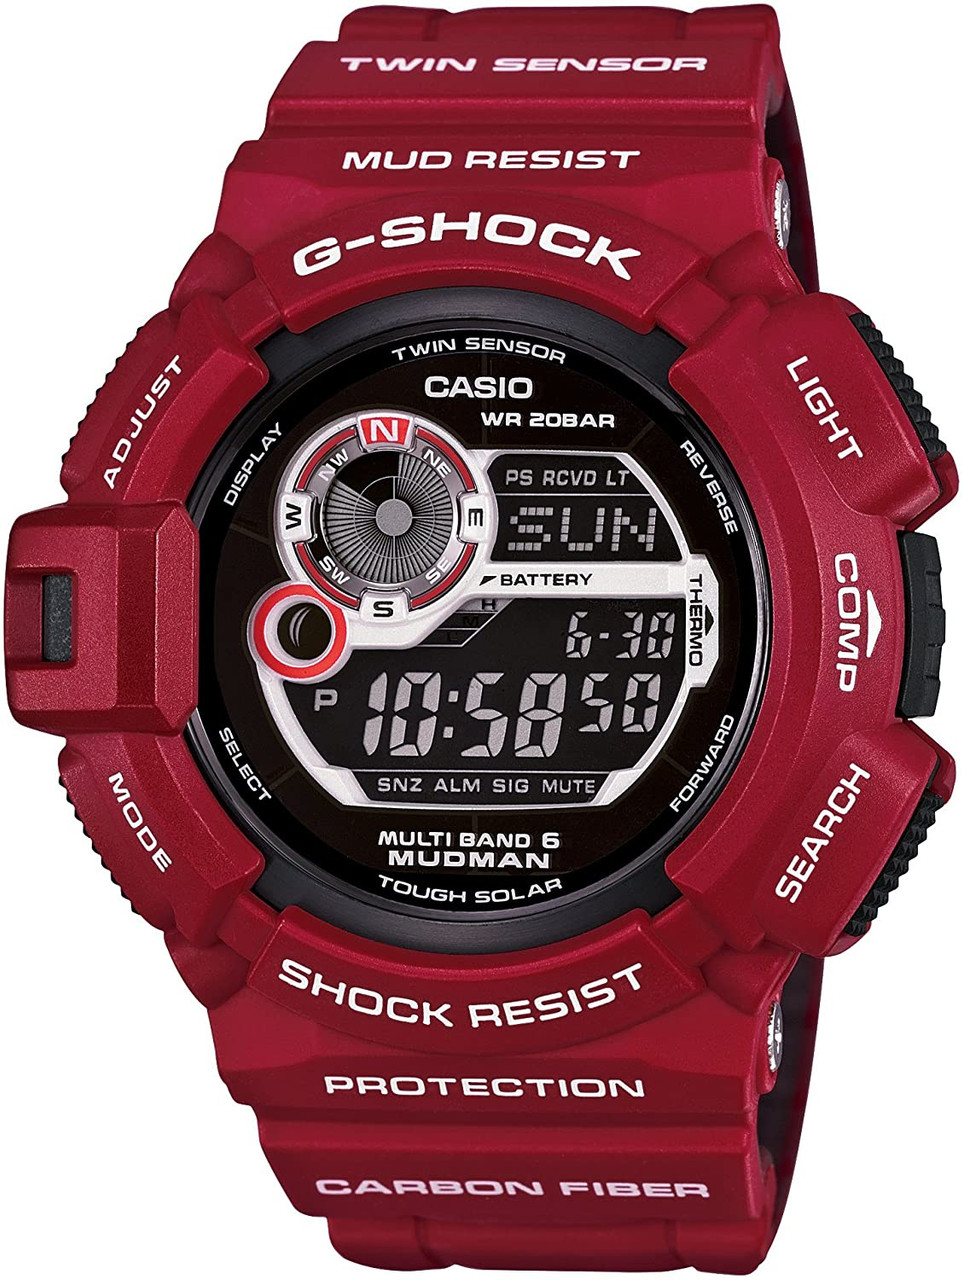 G-Shock Mudman GW-9300RD-4JF Men in Rescue Red